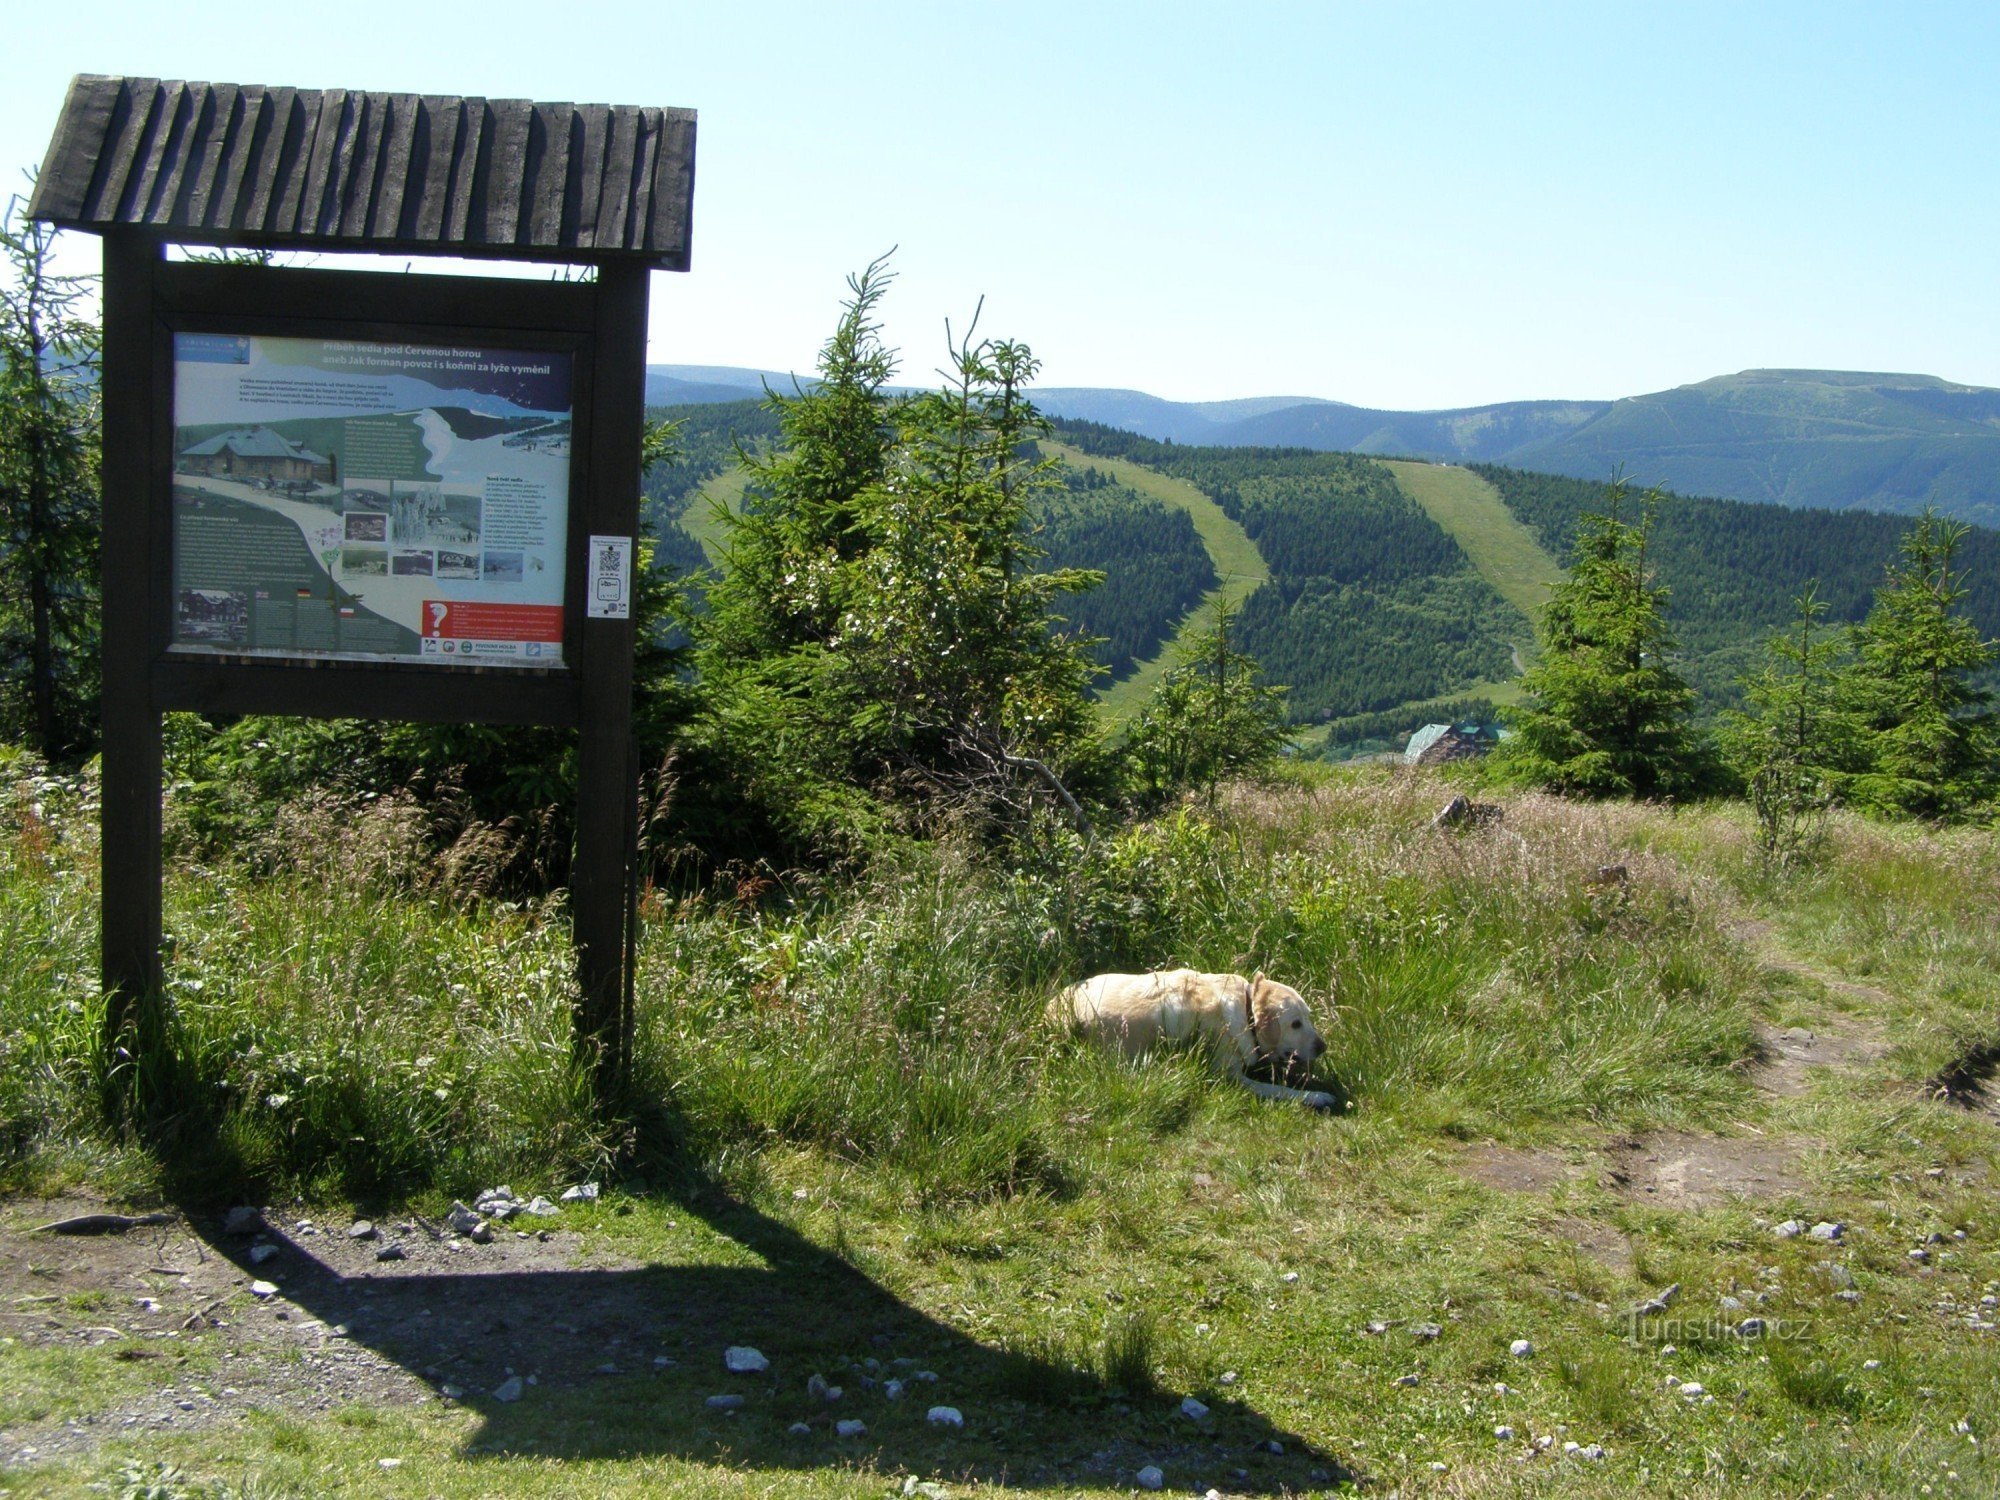 Praděd、Červenohorské sedlo 和 Dlouhá Stráná 的景色